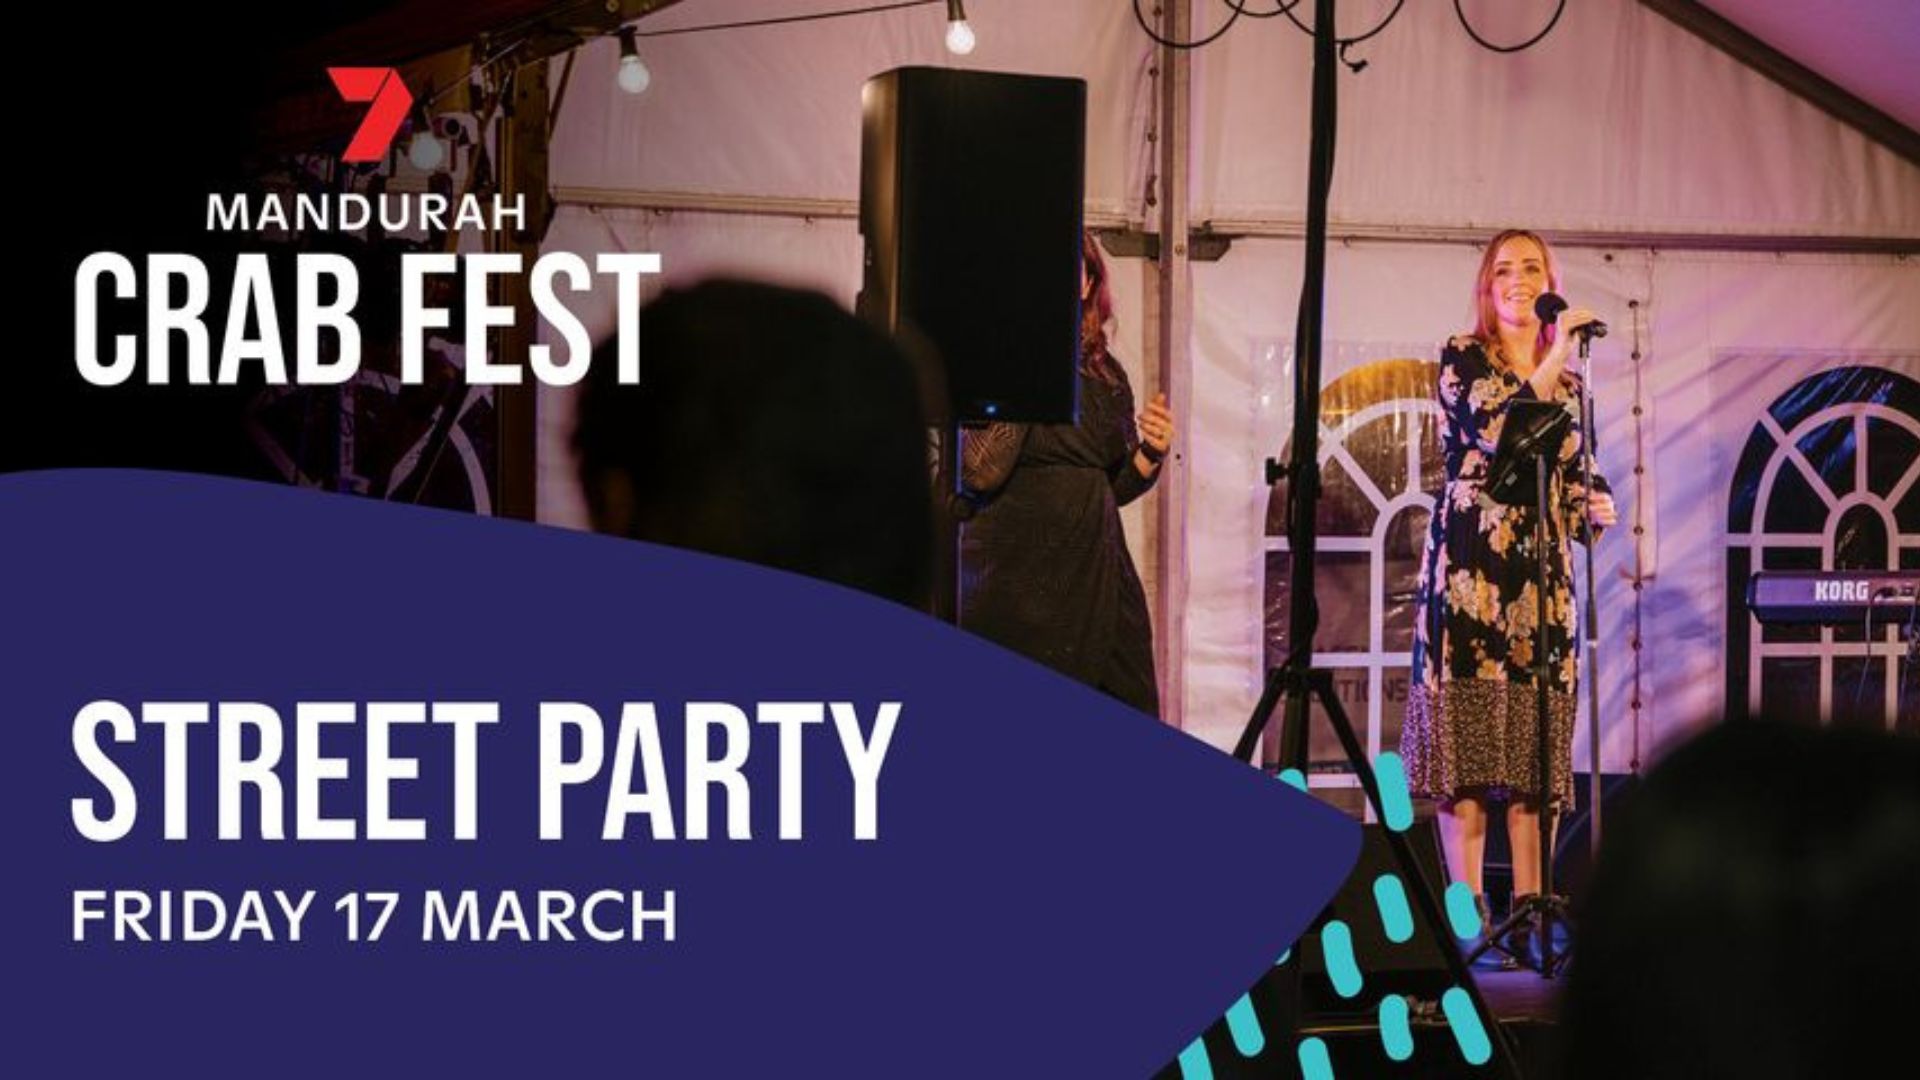 Mandurah Crab Fest Street Party